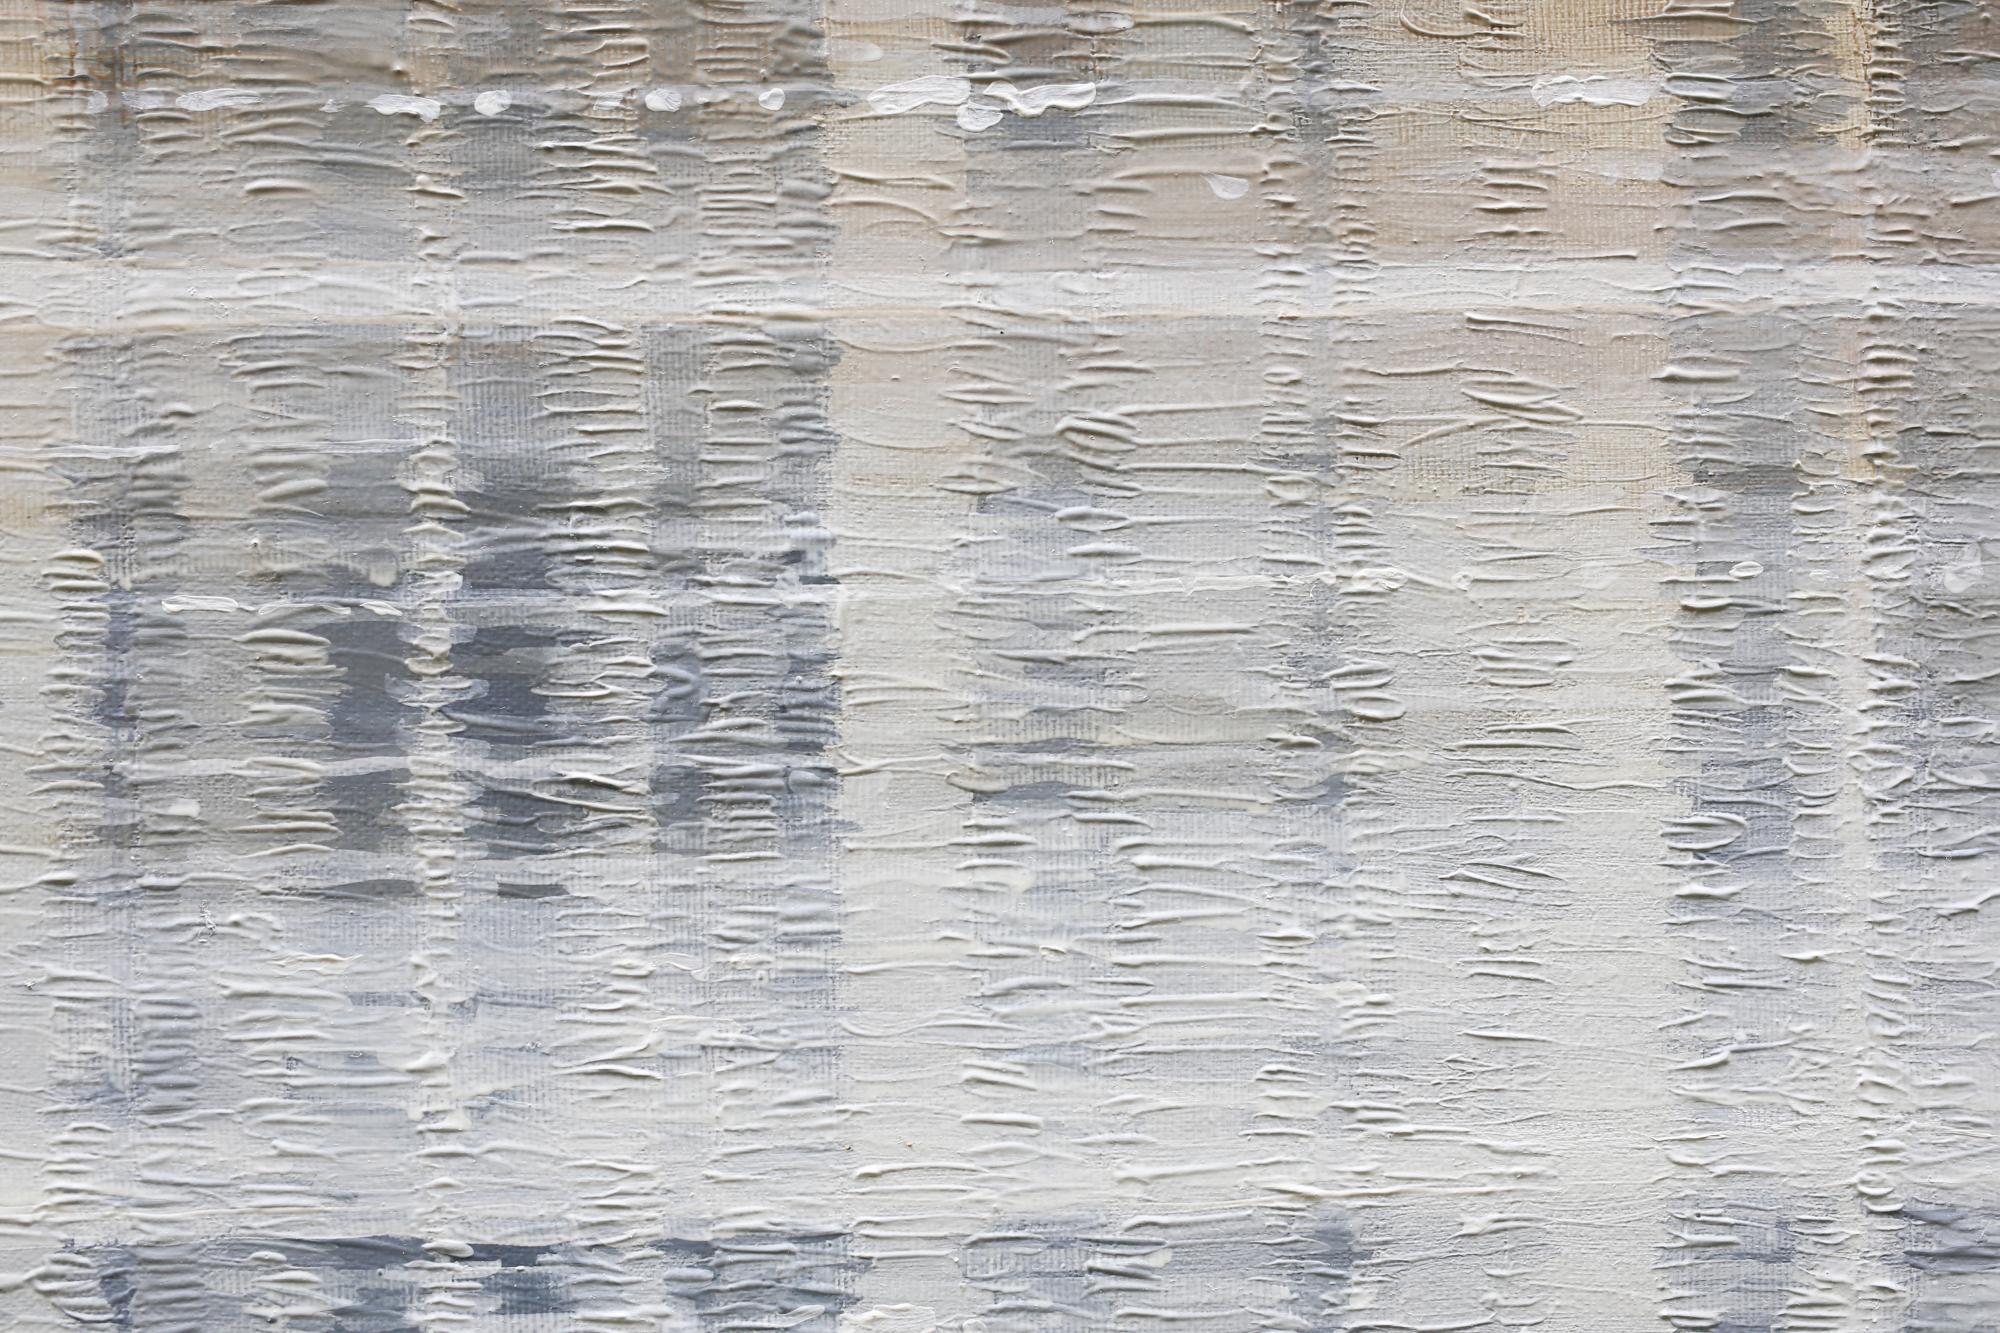 REFLECTIONS 1 - Contemporary Atmospheric Landscape,  Moderne Seelandschaftsmalerei (Grau), Landscape Painting, von Grzegorz Wójcik